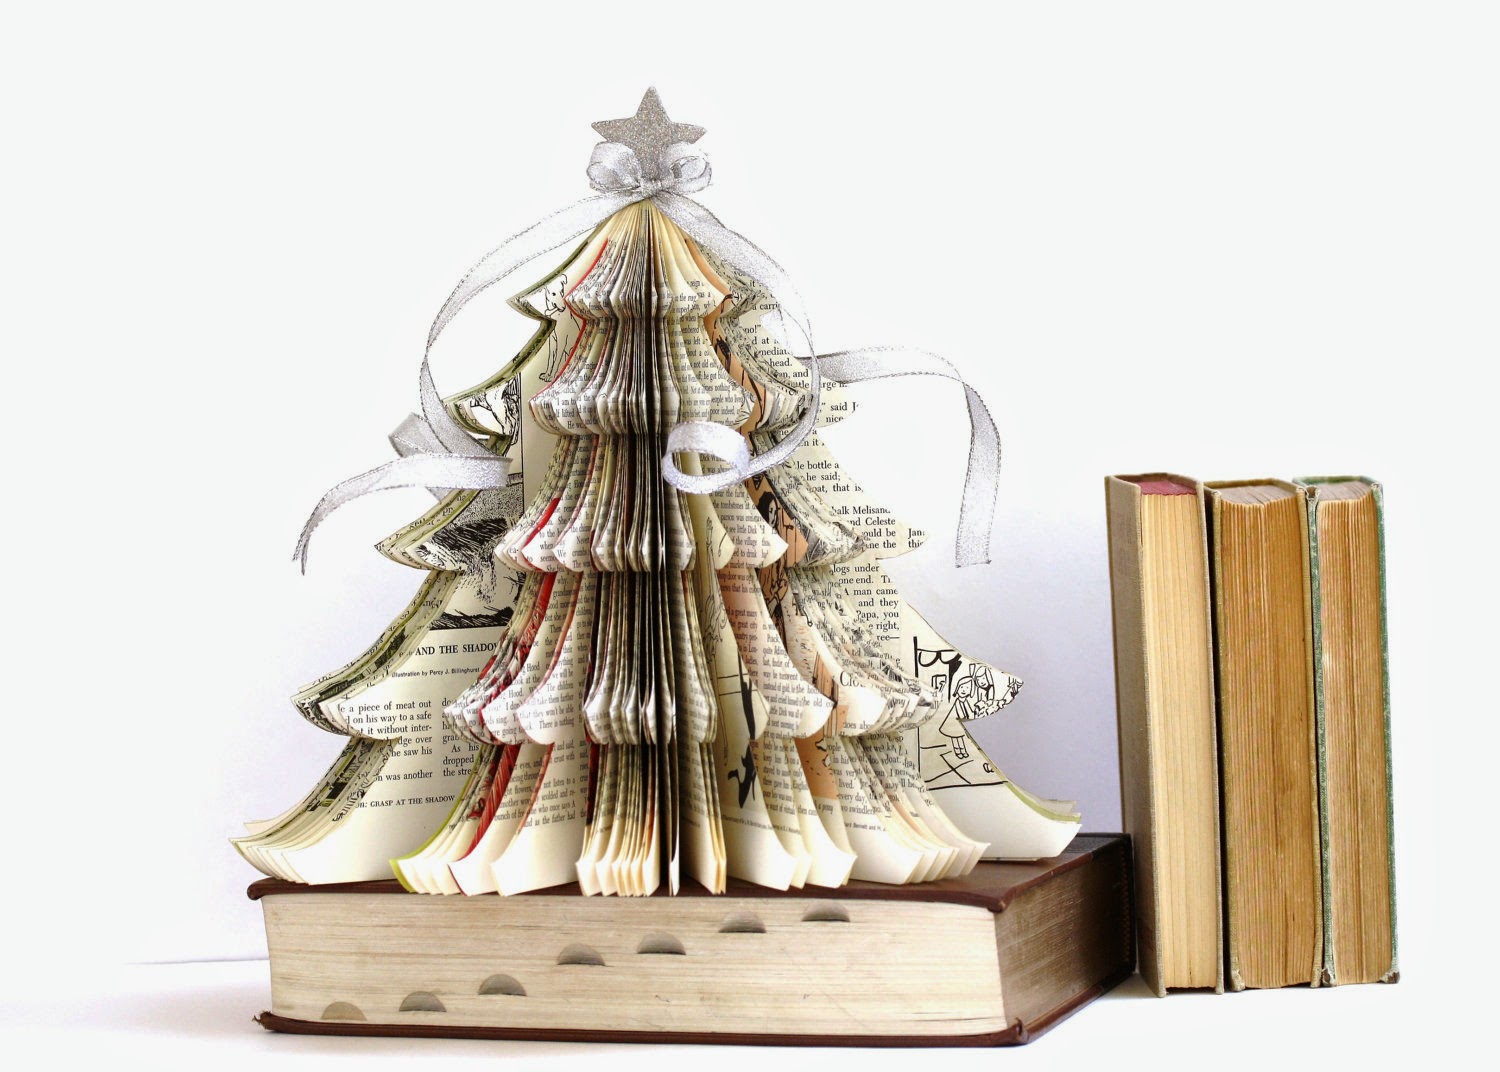 Poesie Di Natale Anni 60.Auguri In Poesia I Le Ciaramelle I Pascoli